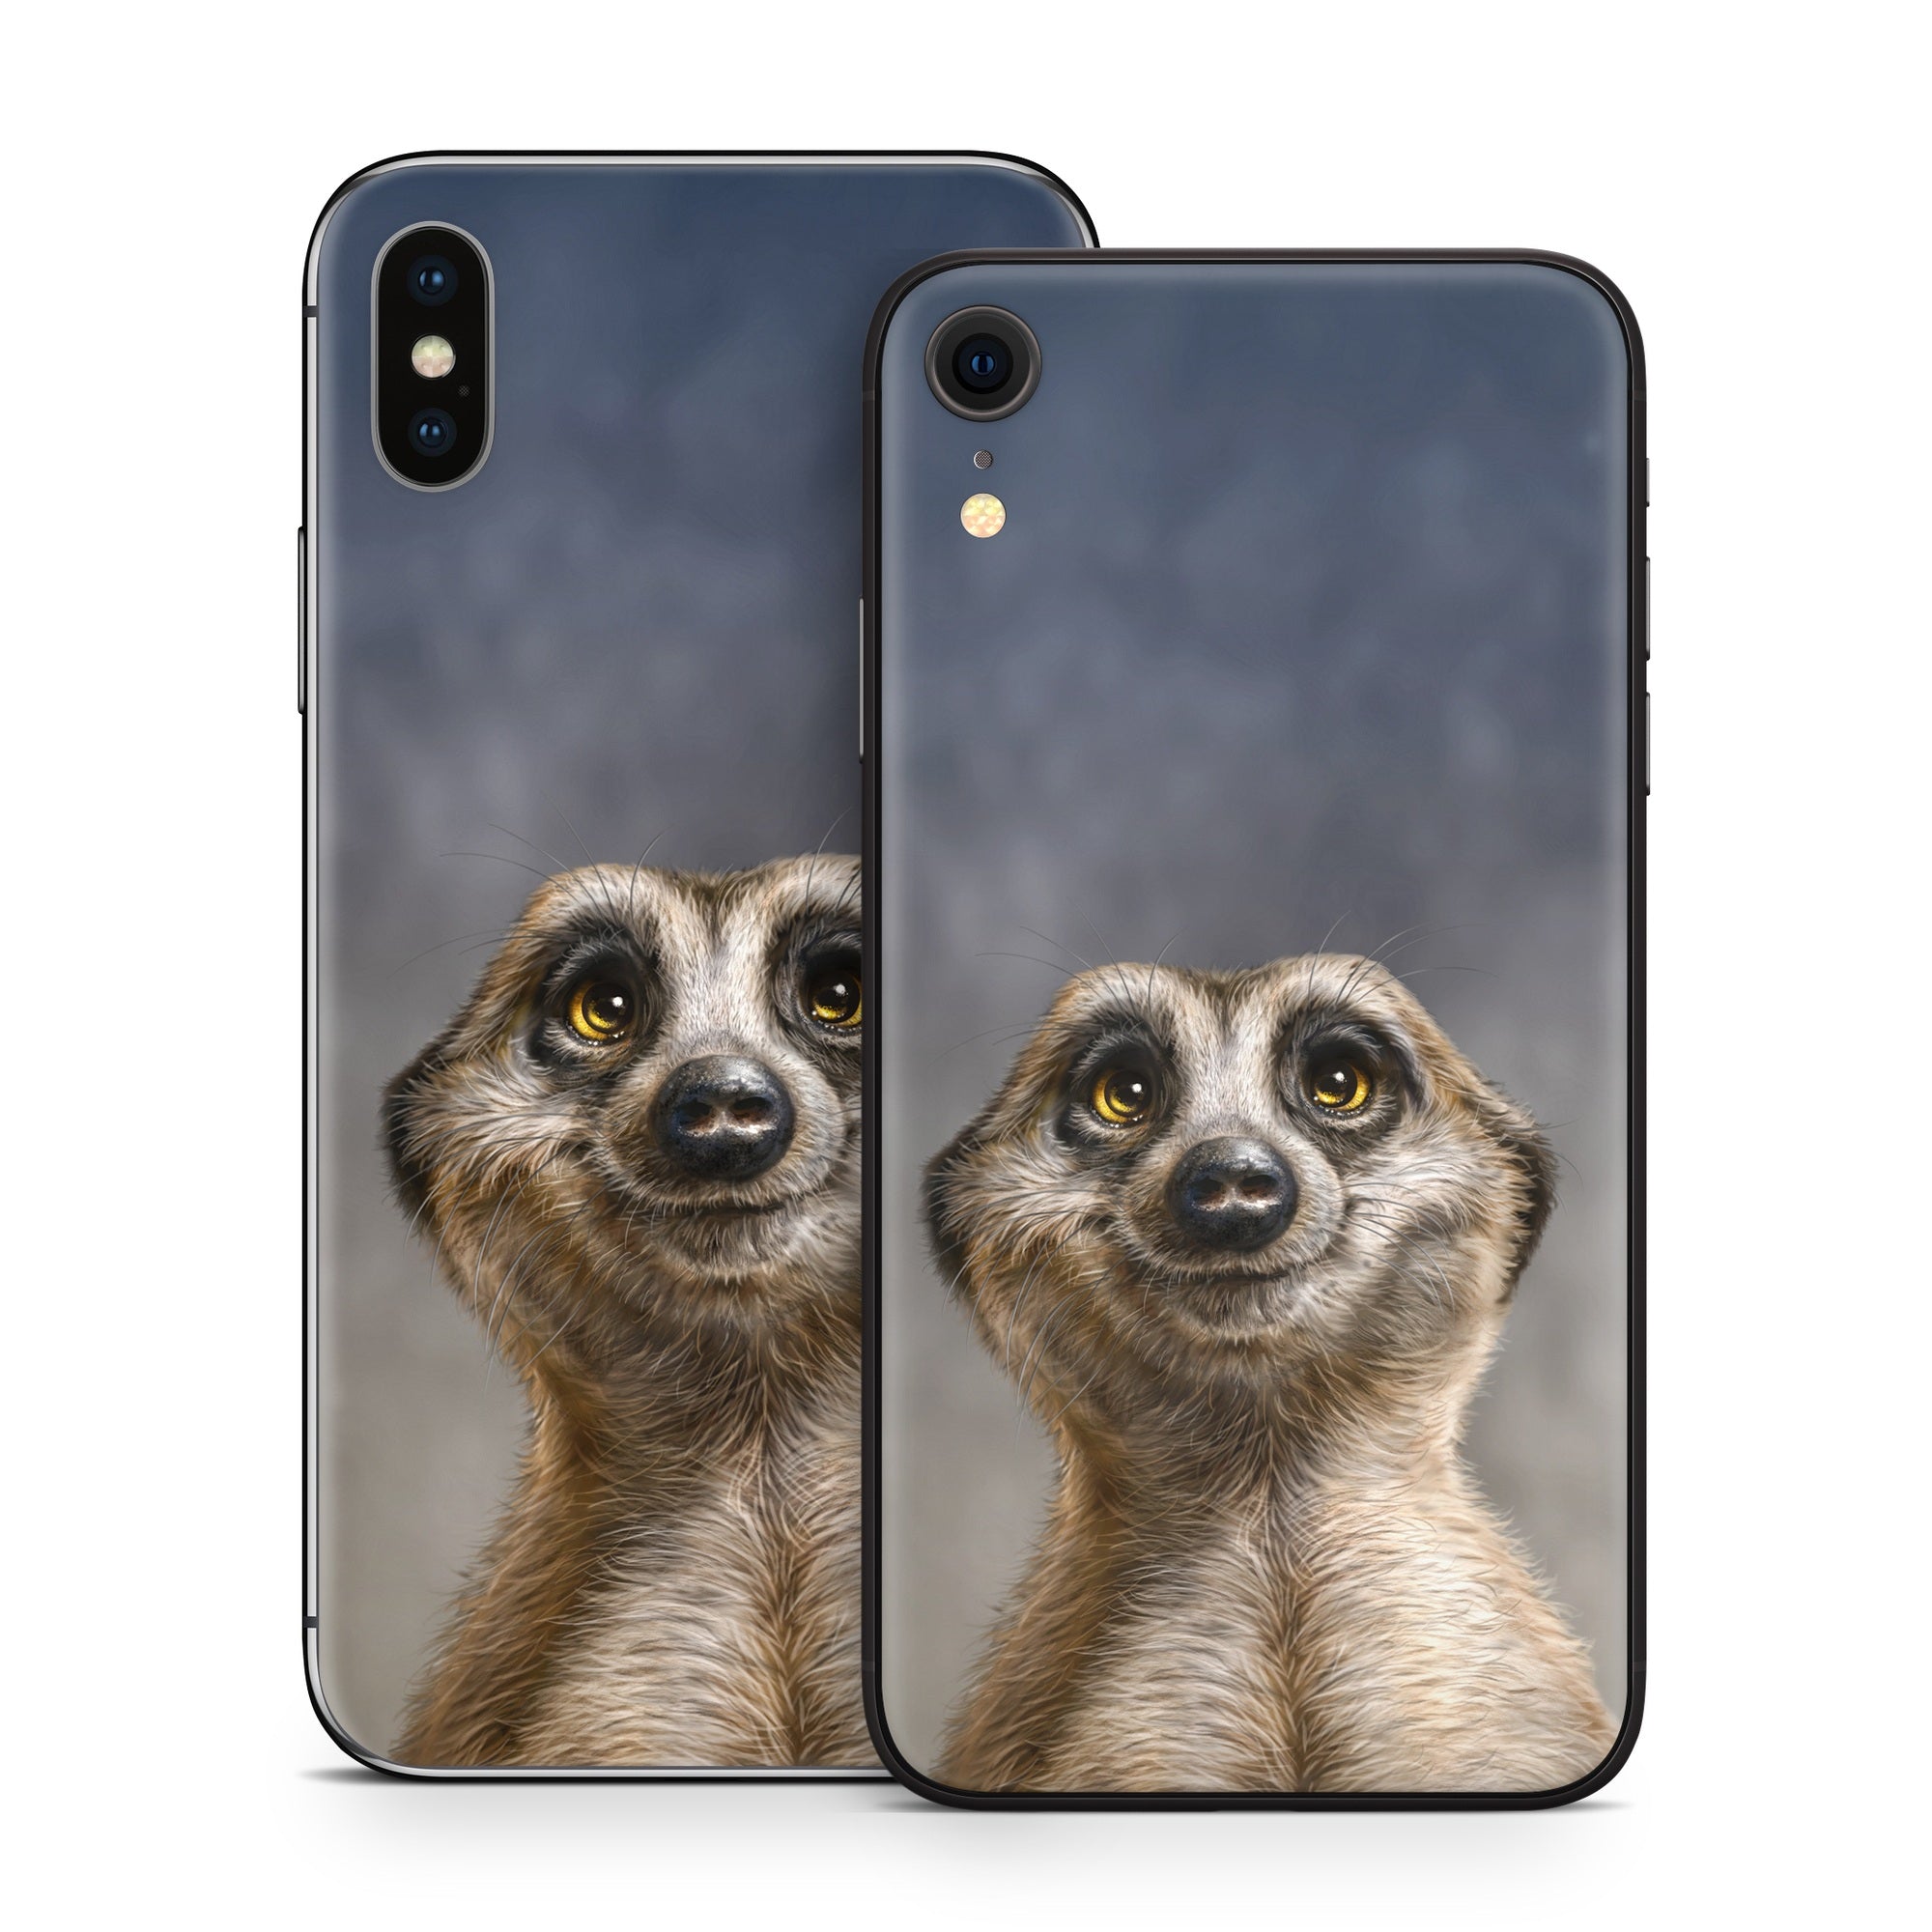 Meerkat - Apple iPhone X Skin